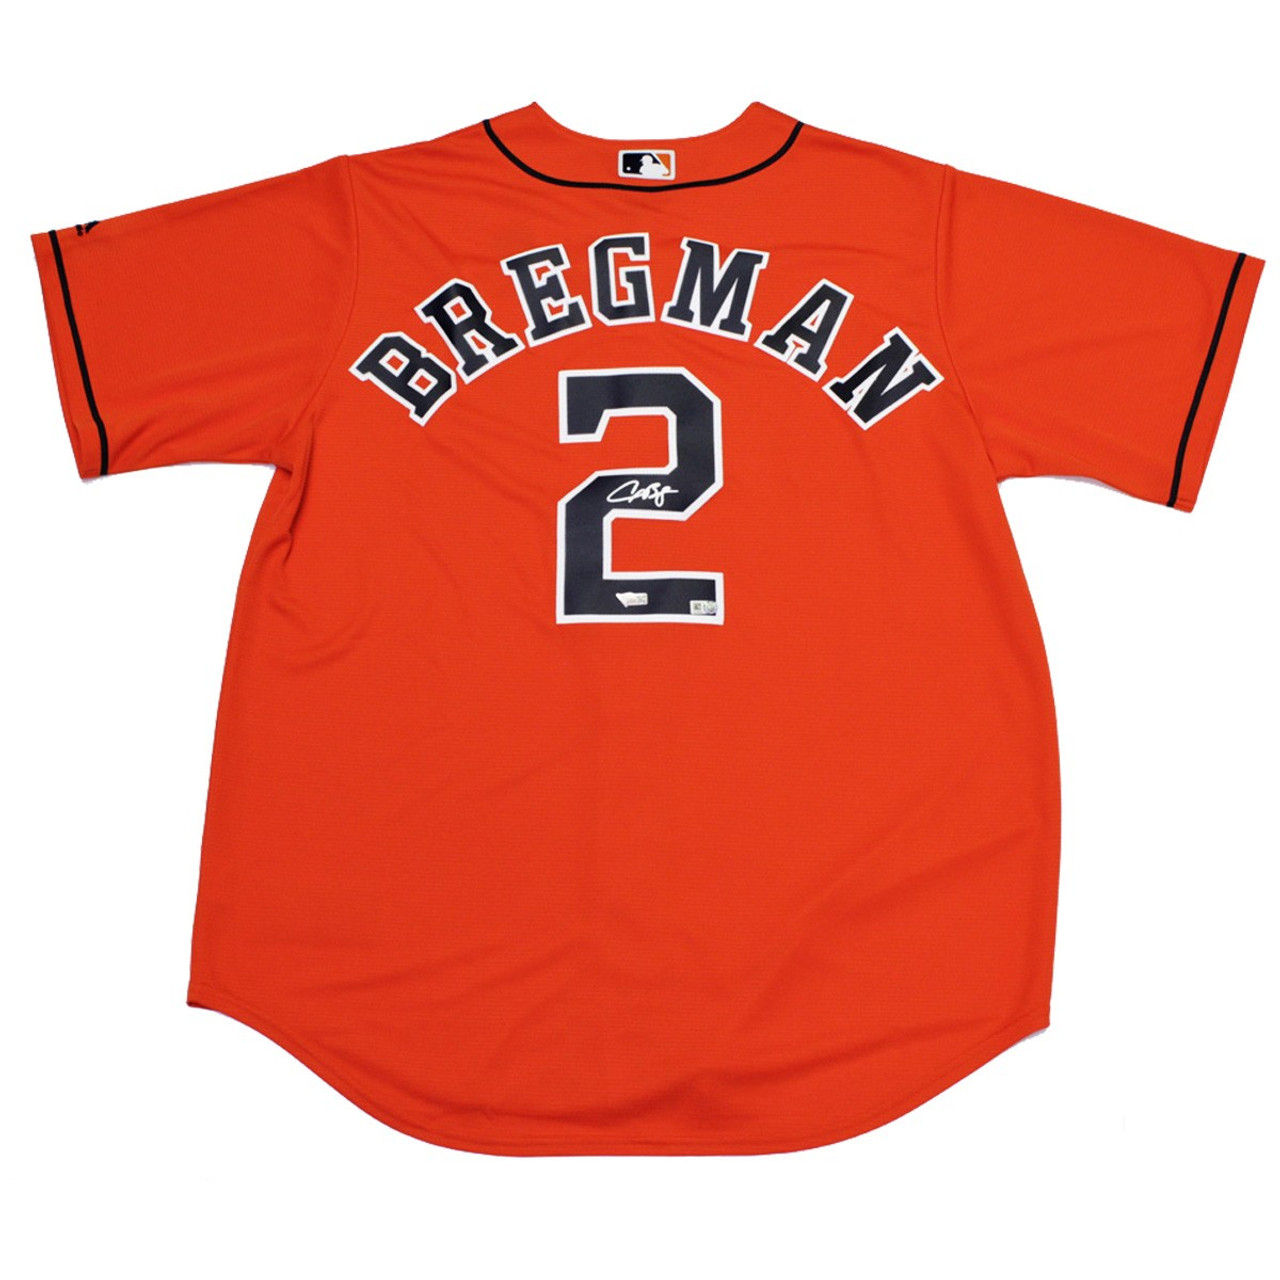 Alex Bregman Autographed Houston Astros Orange Baseball Jersey - Fanatics  Authentic